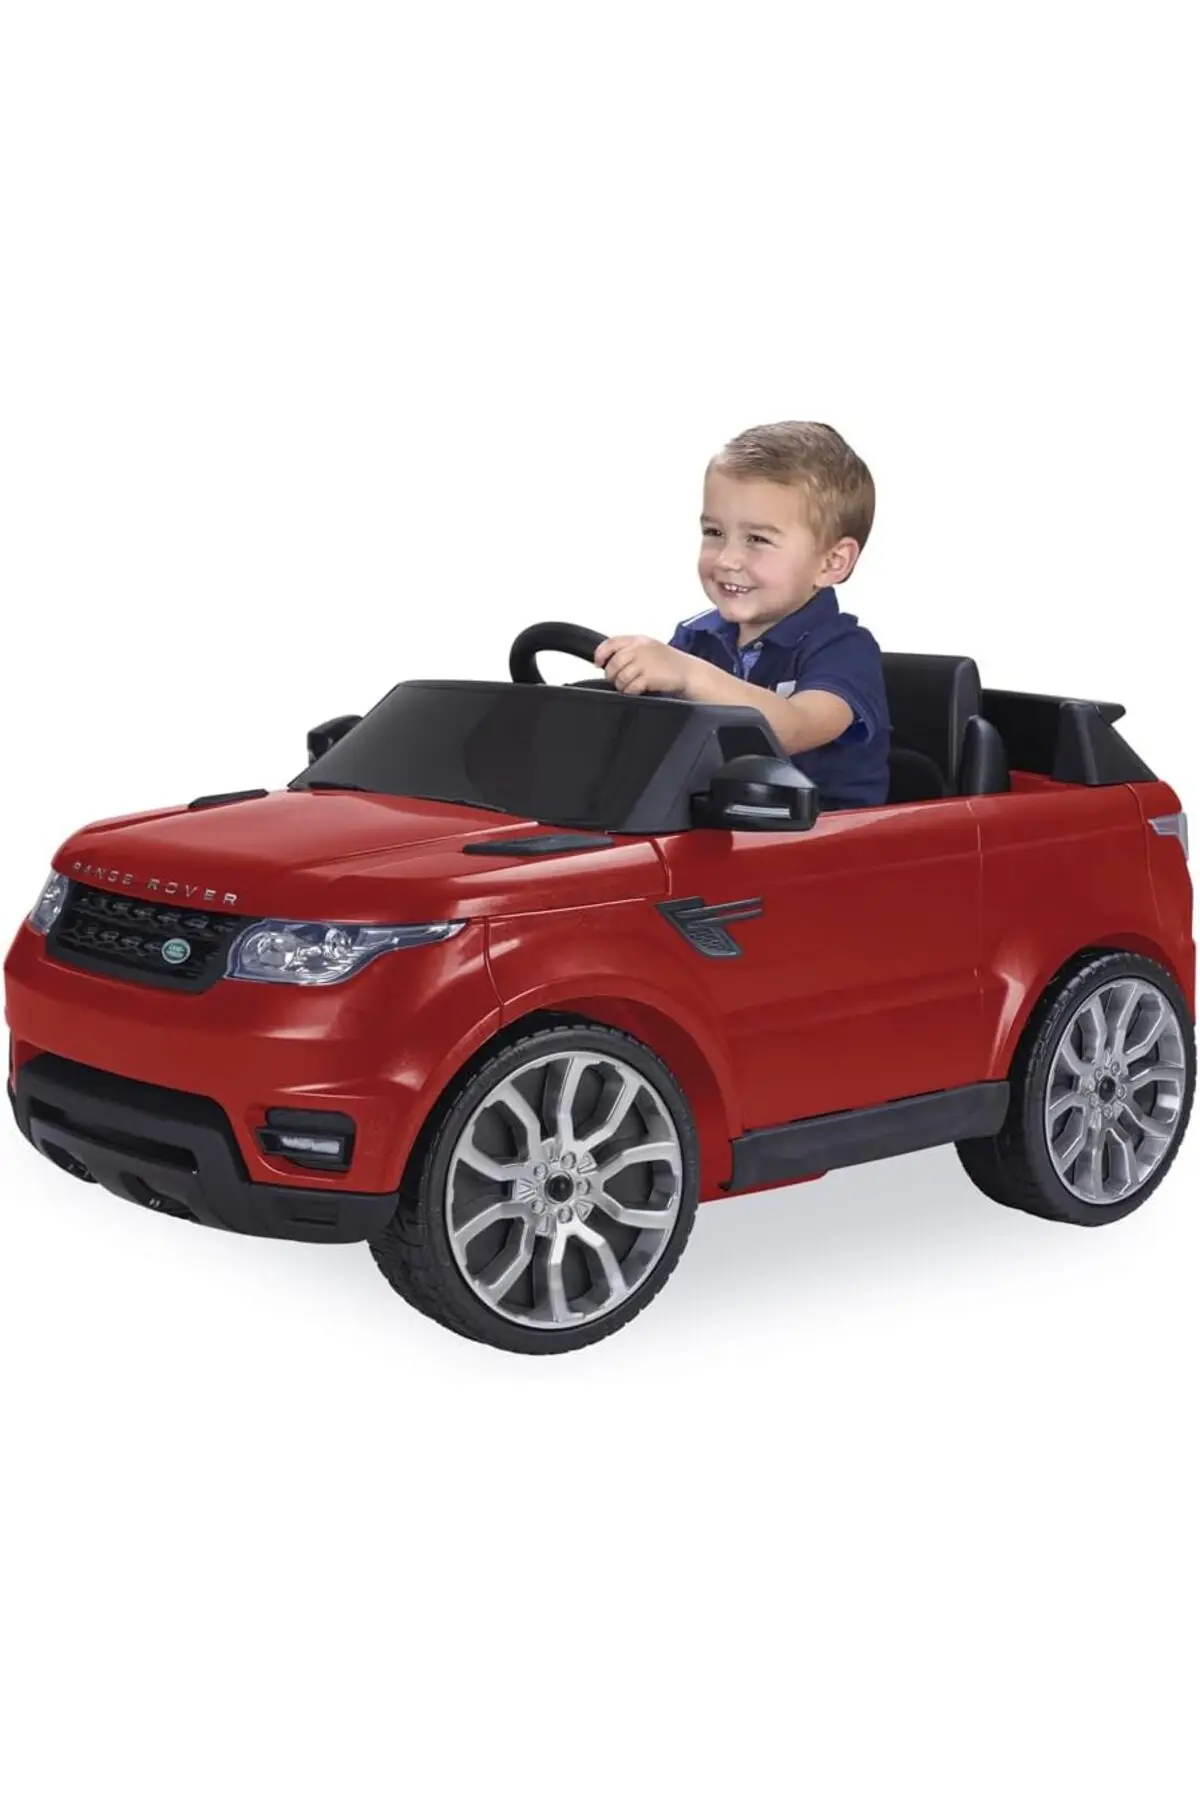 Машина кид. Feber электромобиль. Детская машина range Rover Sport. Машина джип для ребенка Feber. Baby car range Rover.